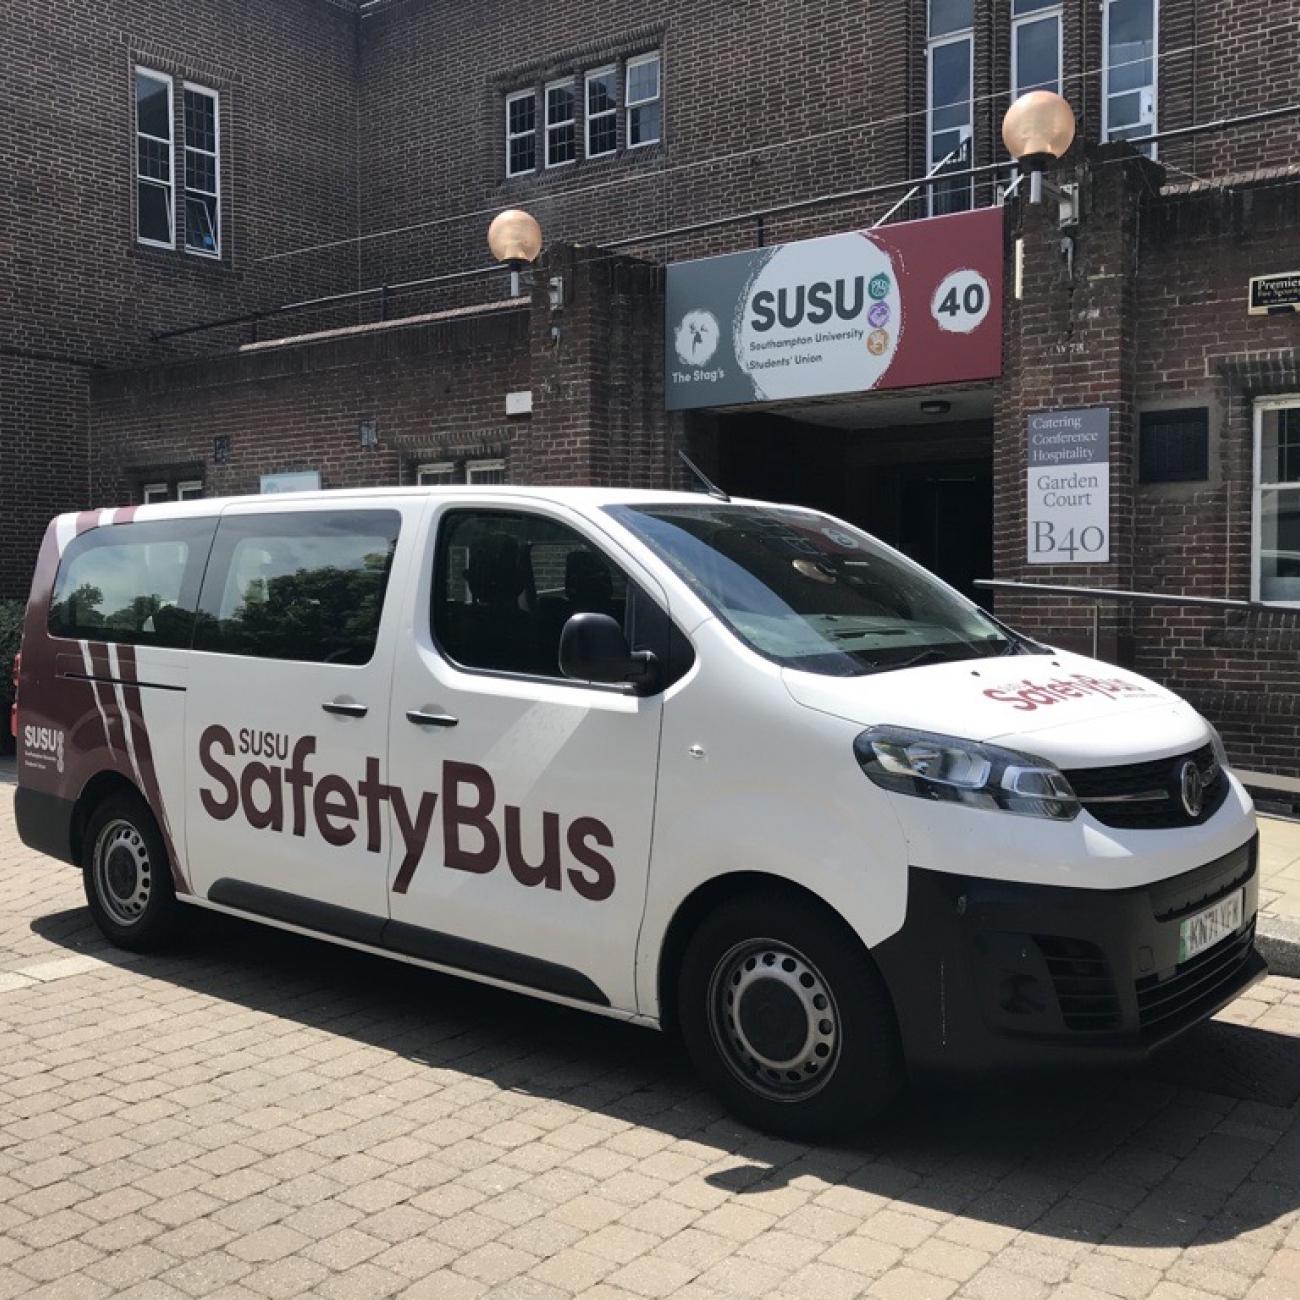 SUSU safety bus